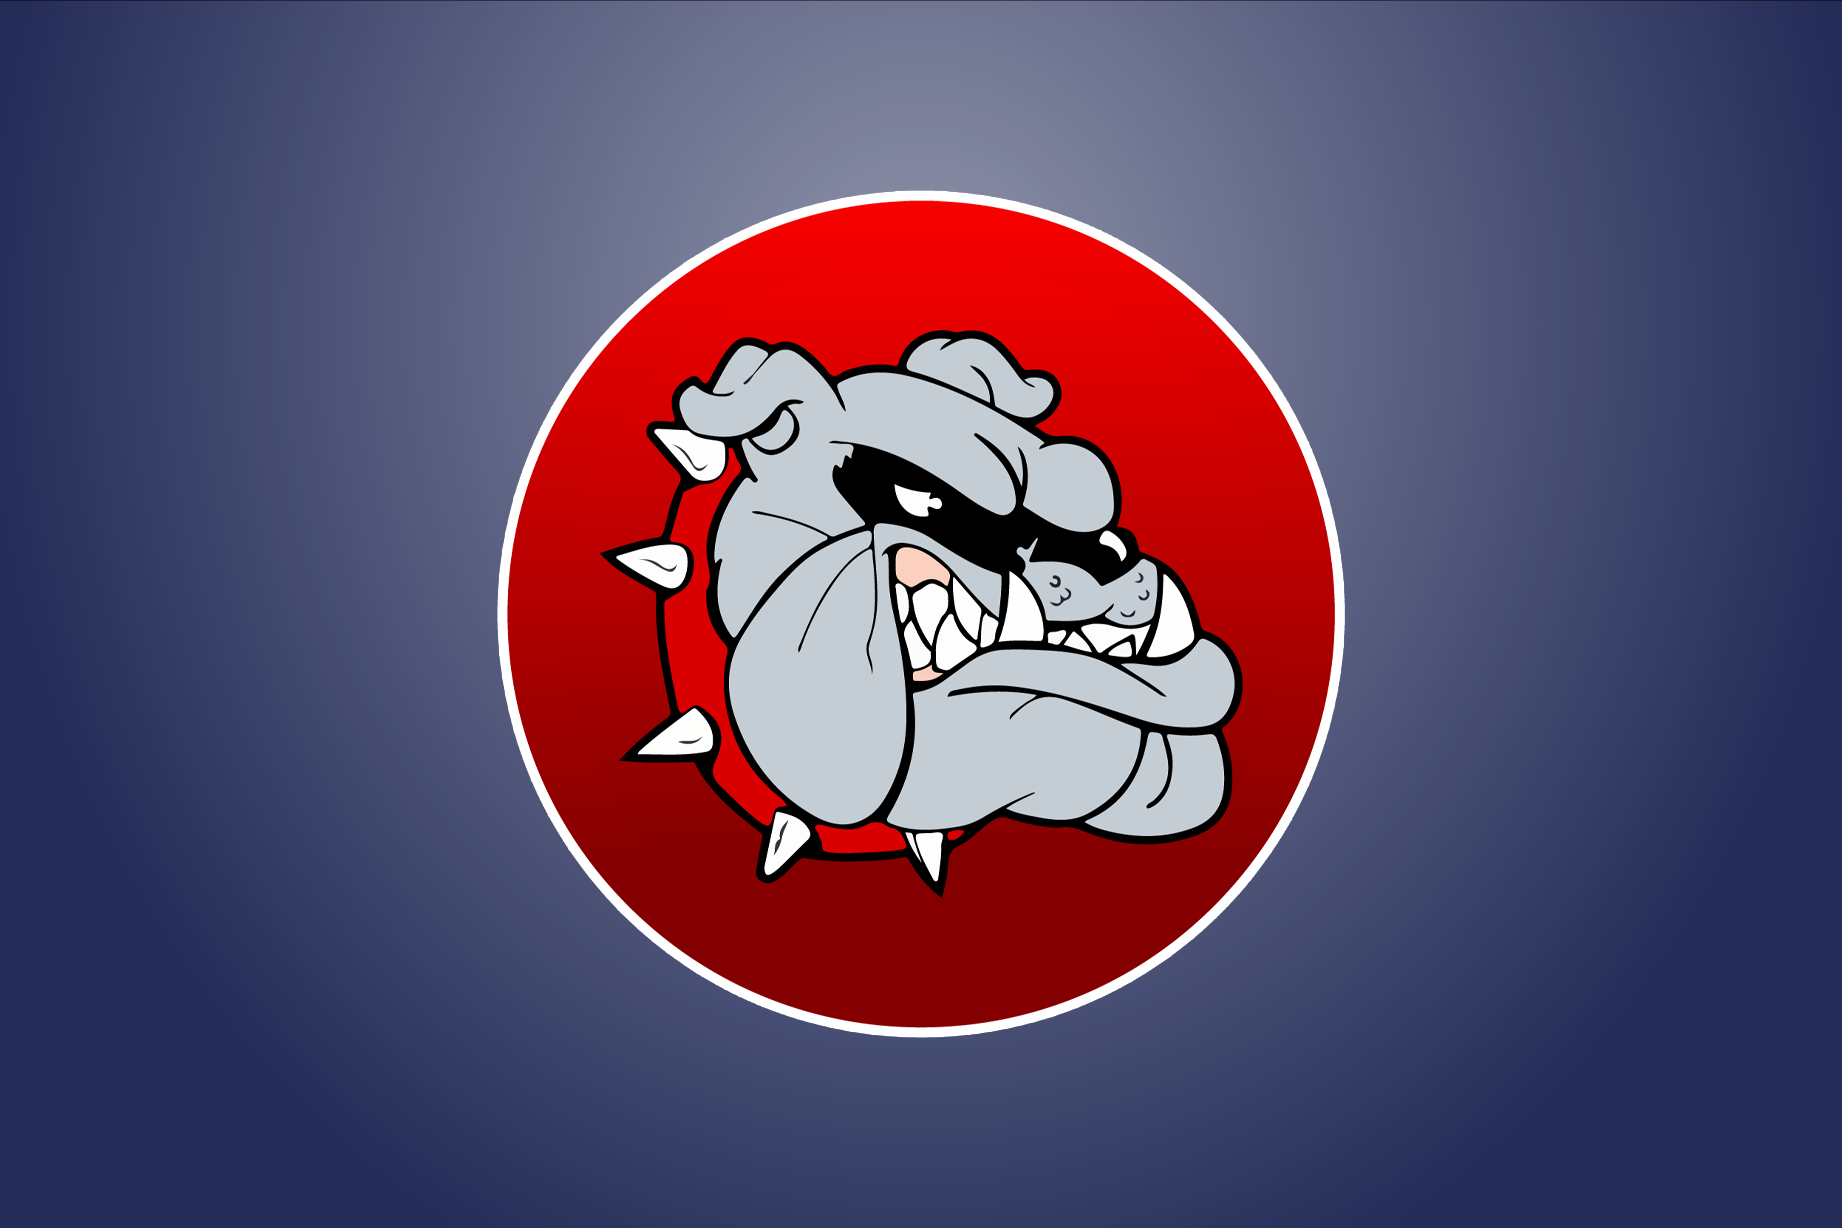 BulldogHighland USD 5 logo